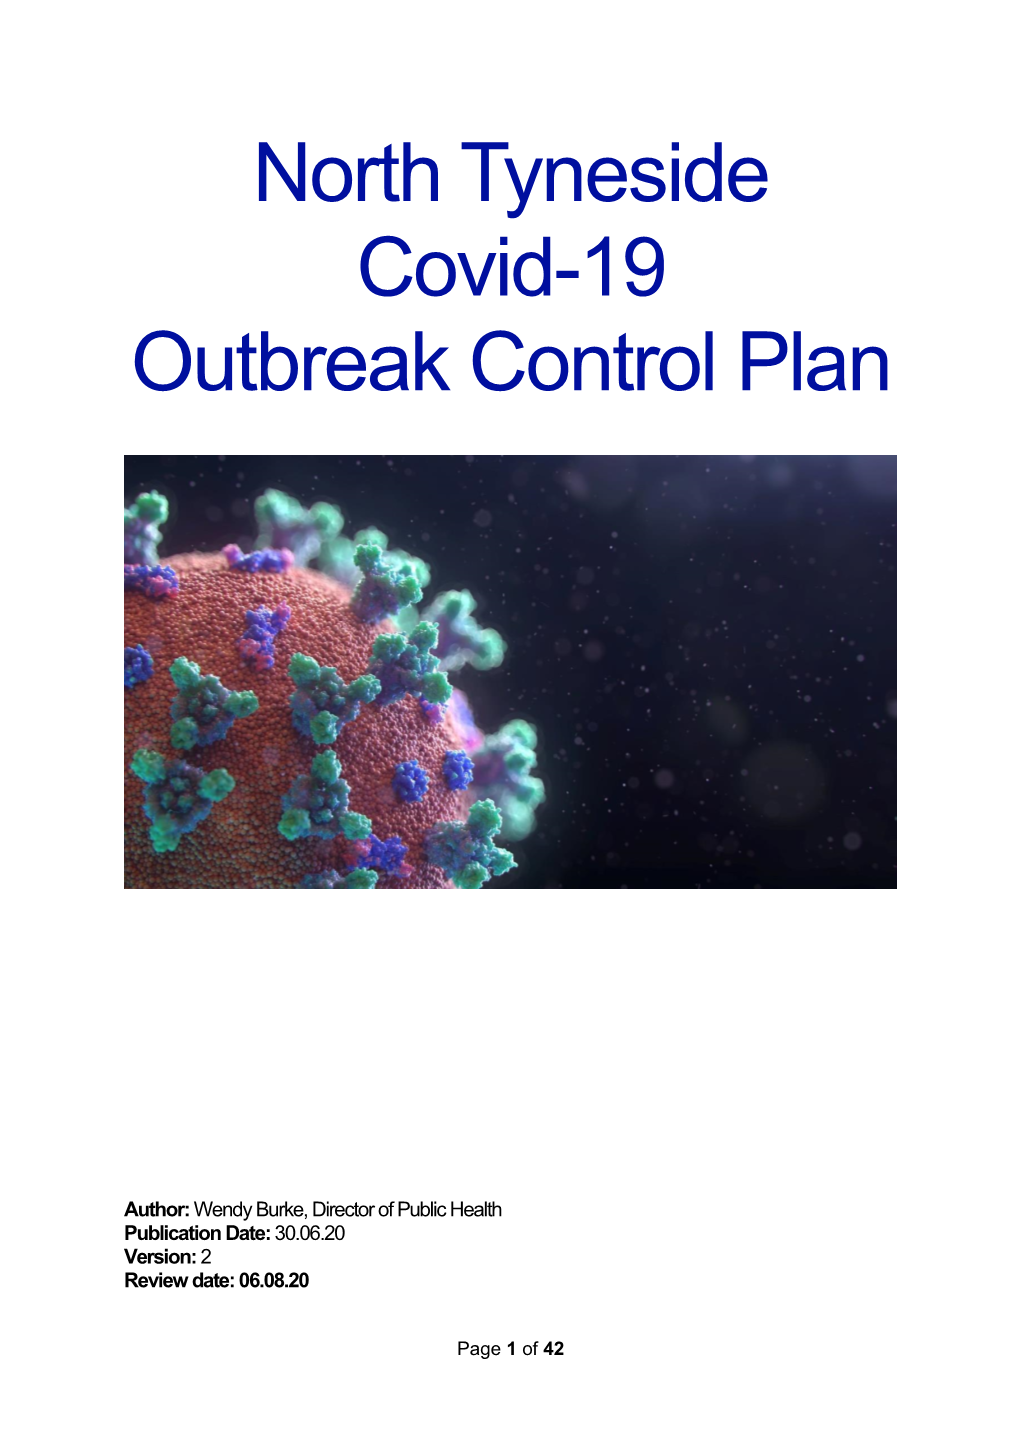 North Tyneside Covid-19 Outbreak Control Plan